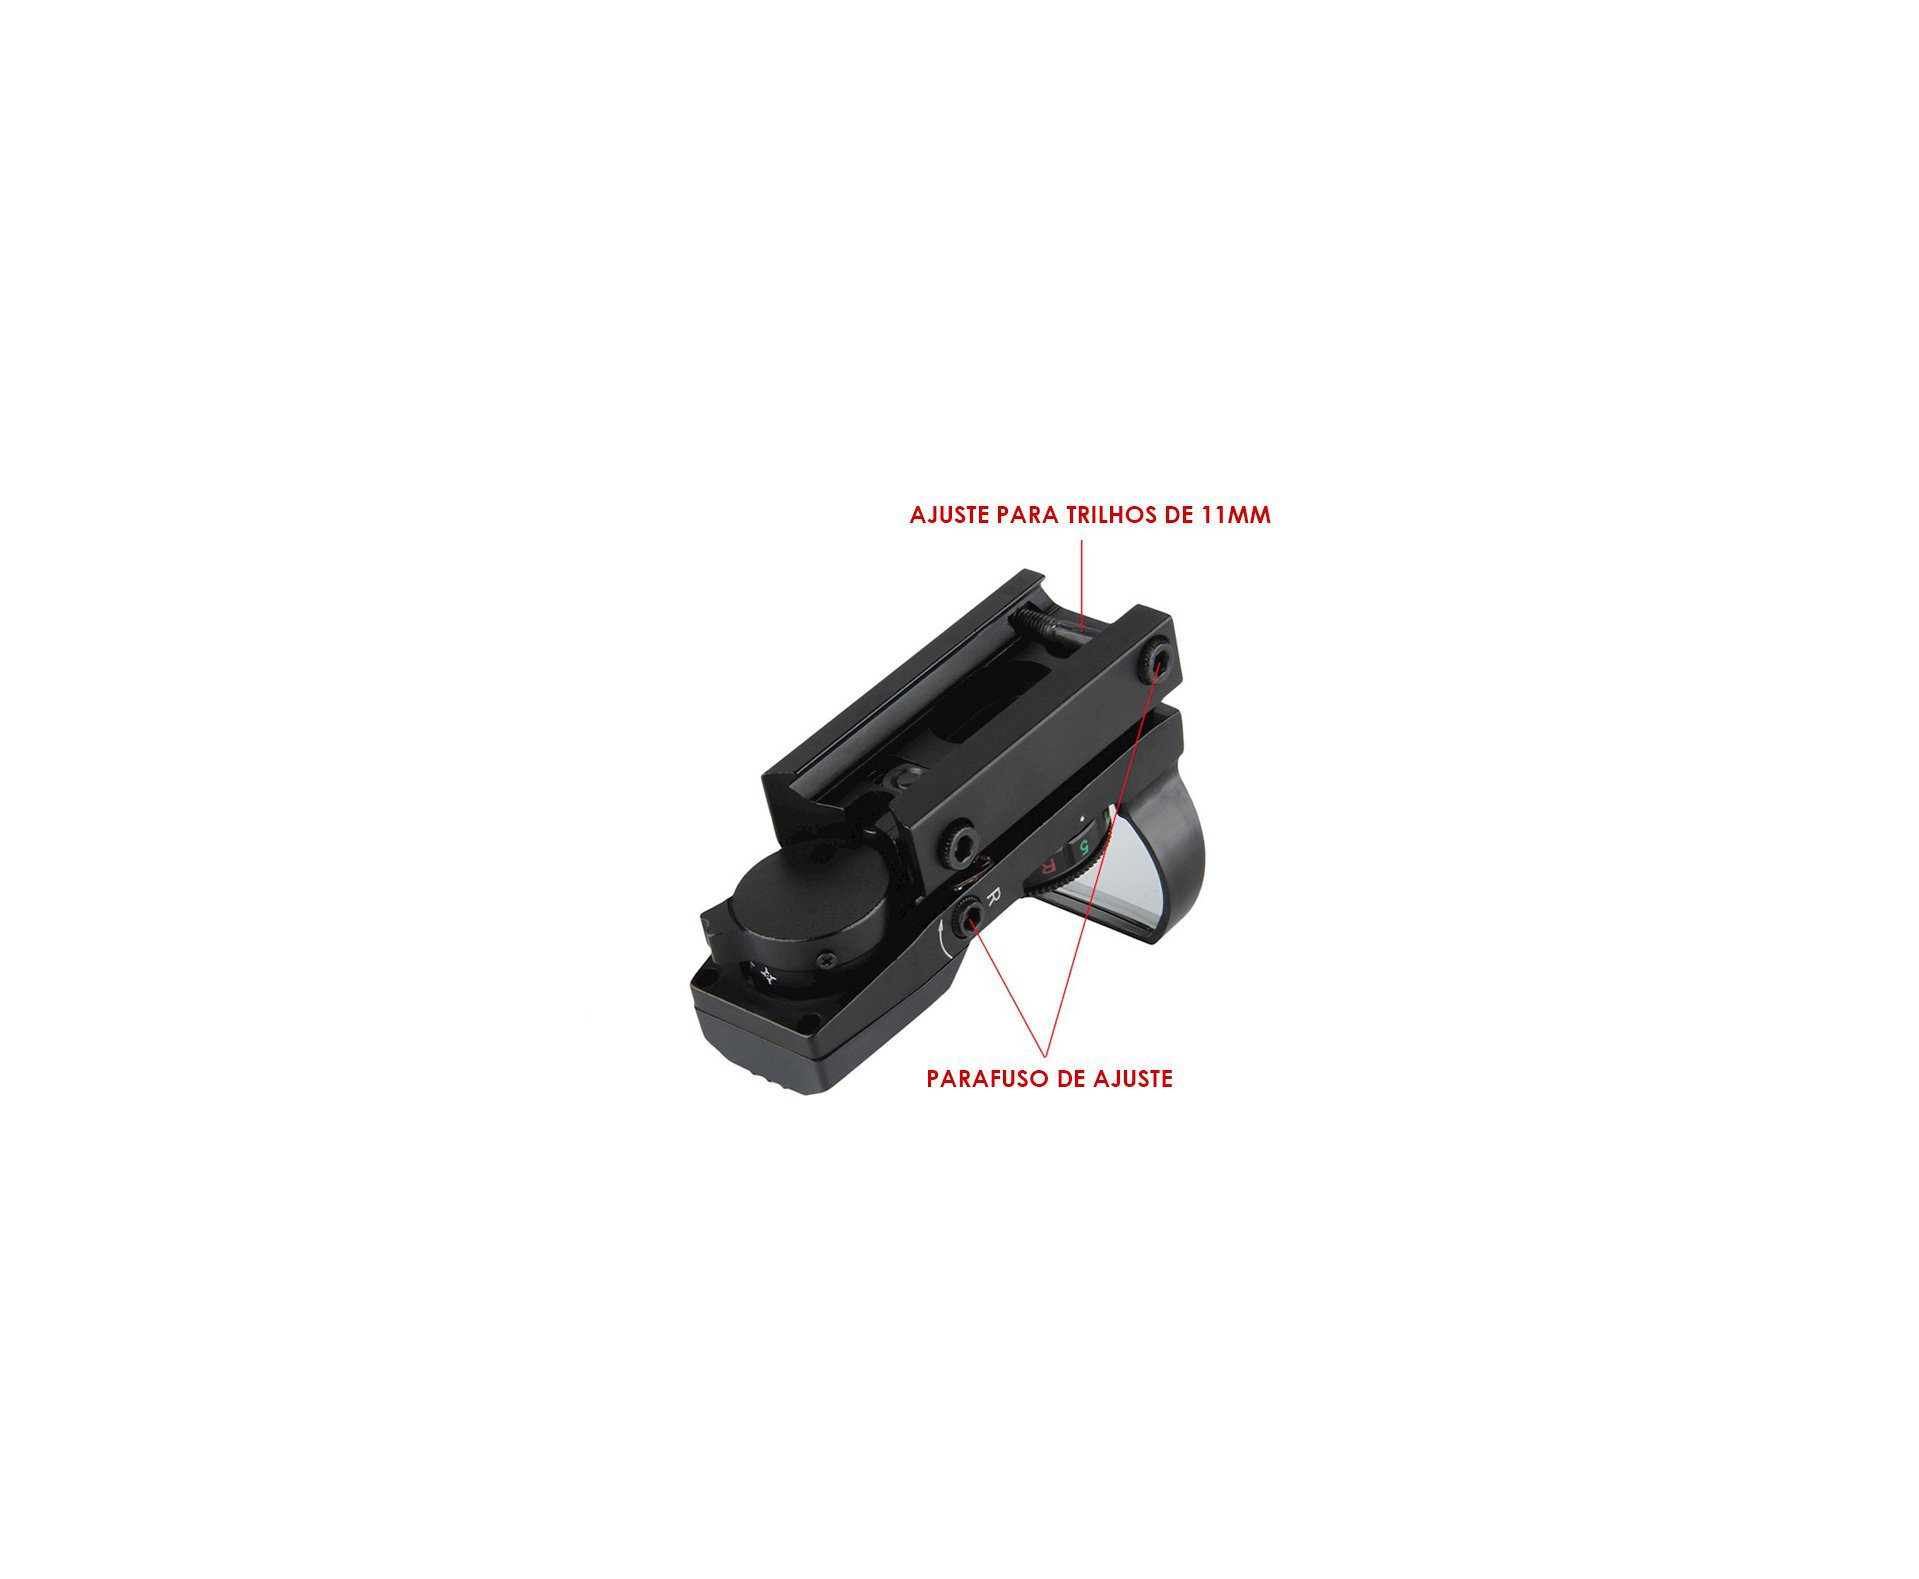 Red Dot 1x22x32 Trilho 11mm Impermeável E Anti-choque Quickshot